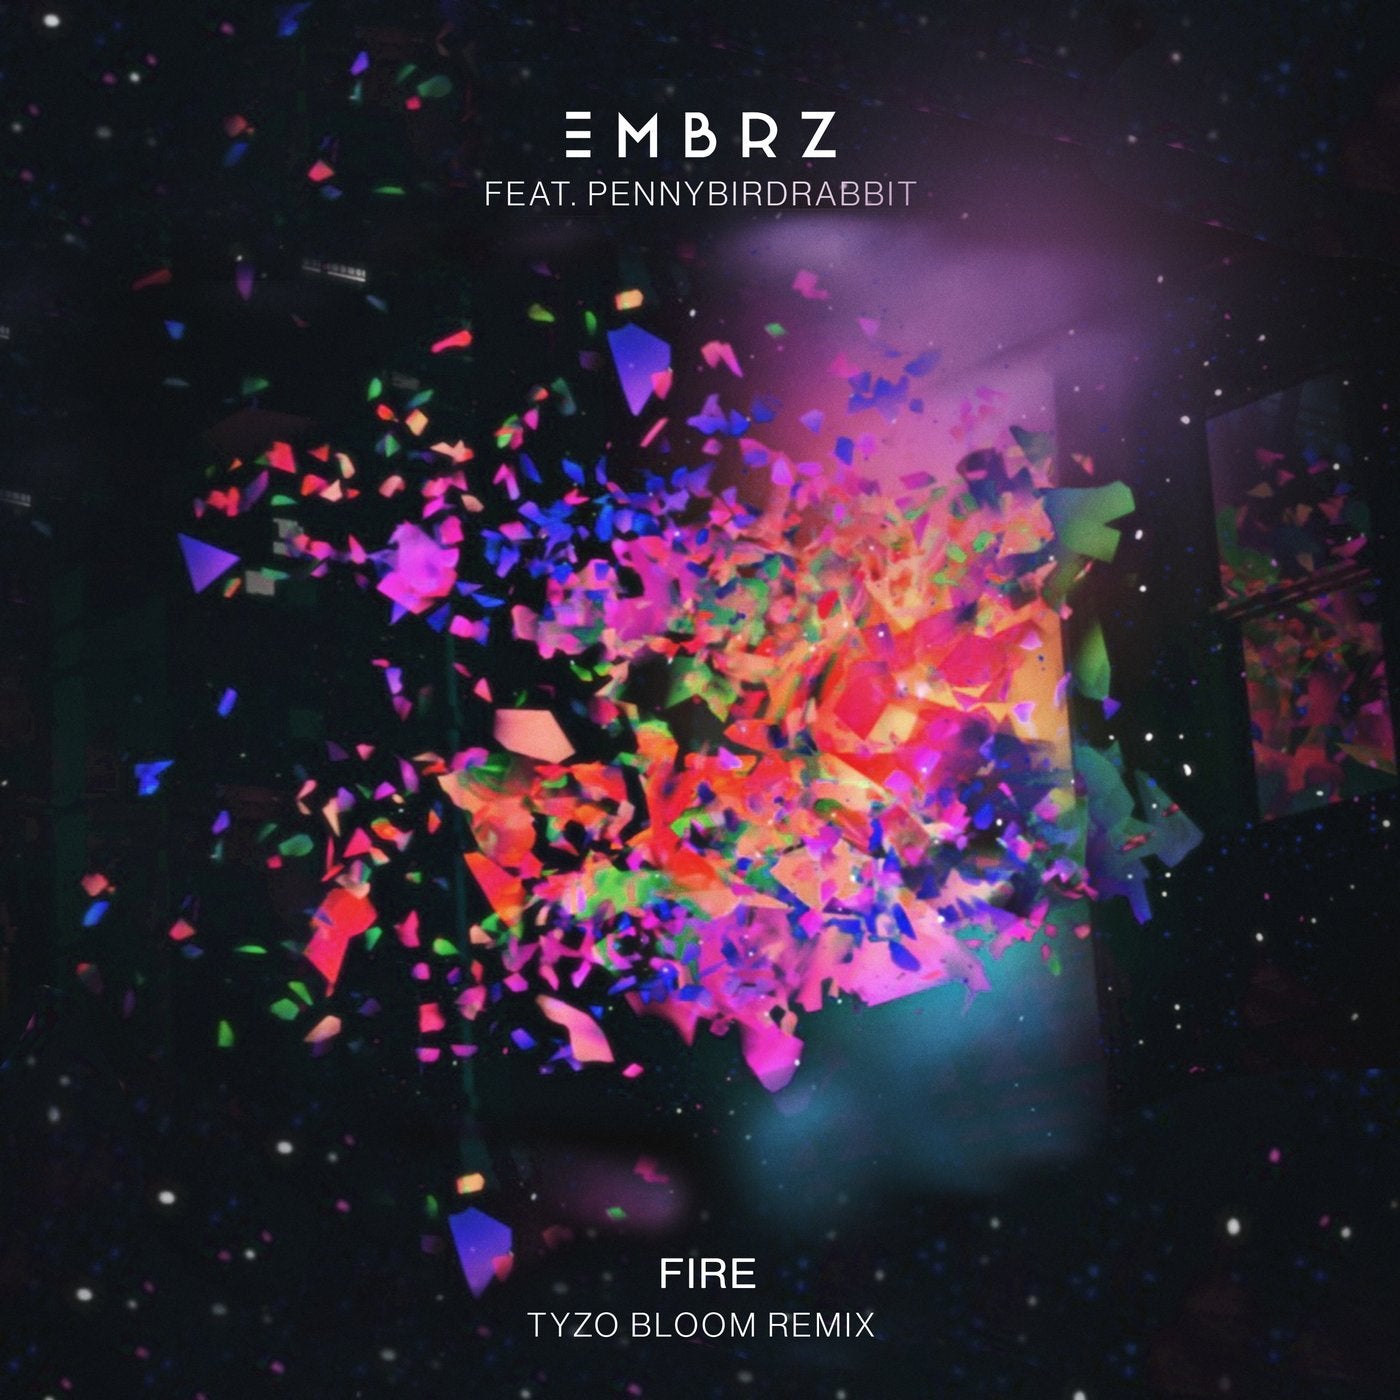 Fire - Tyzo Bloom Remix